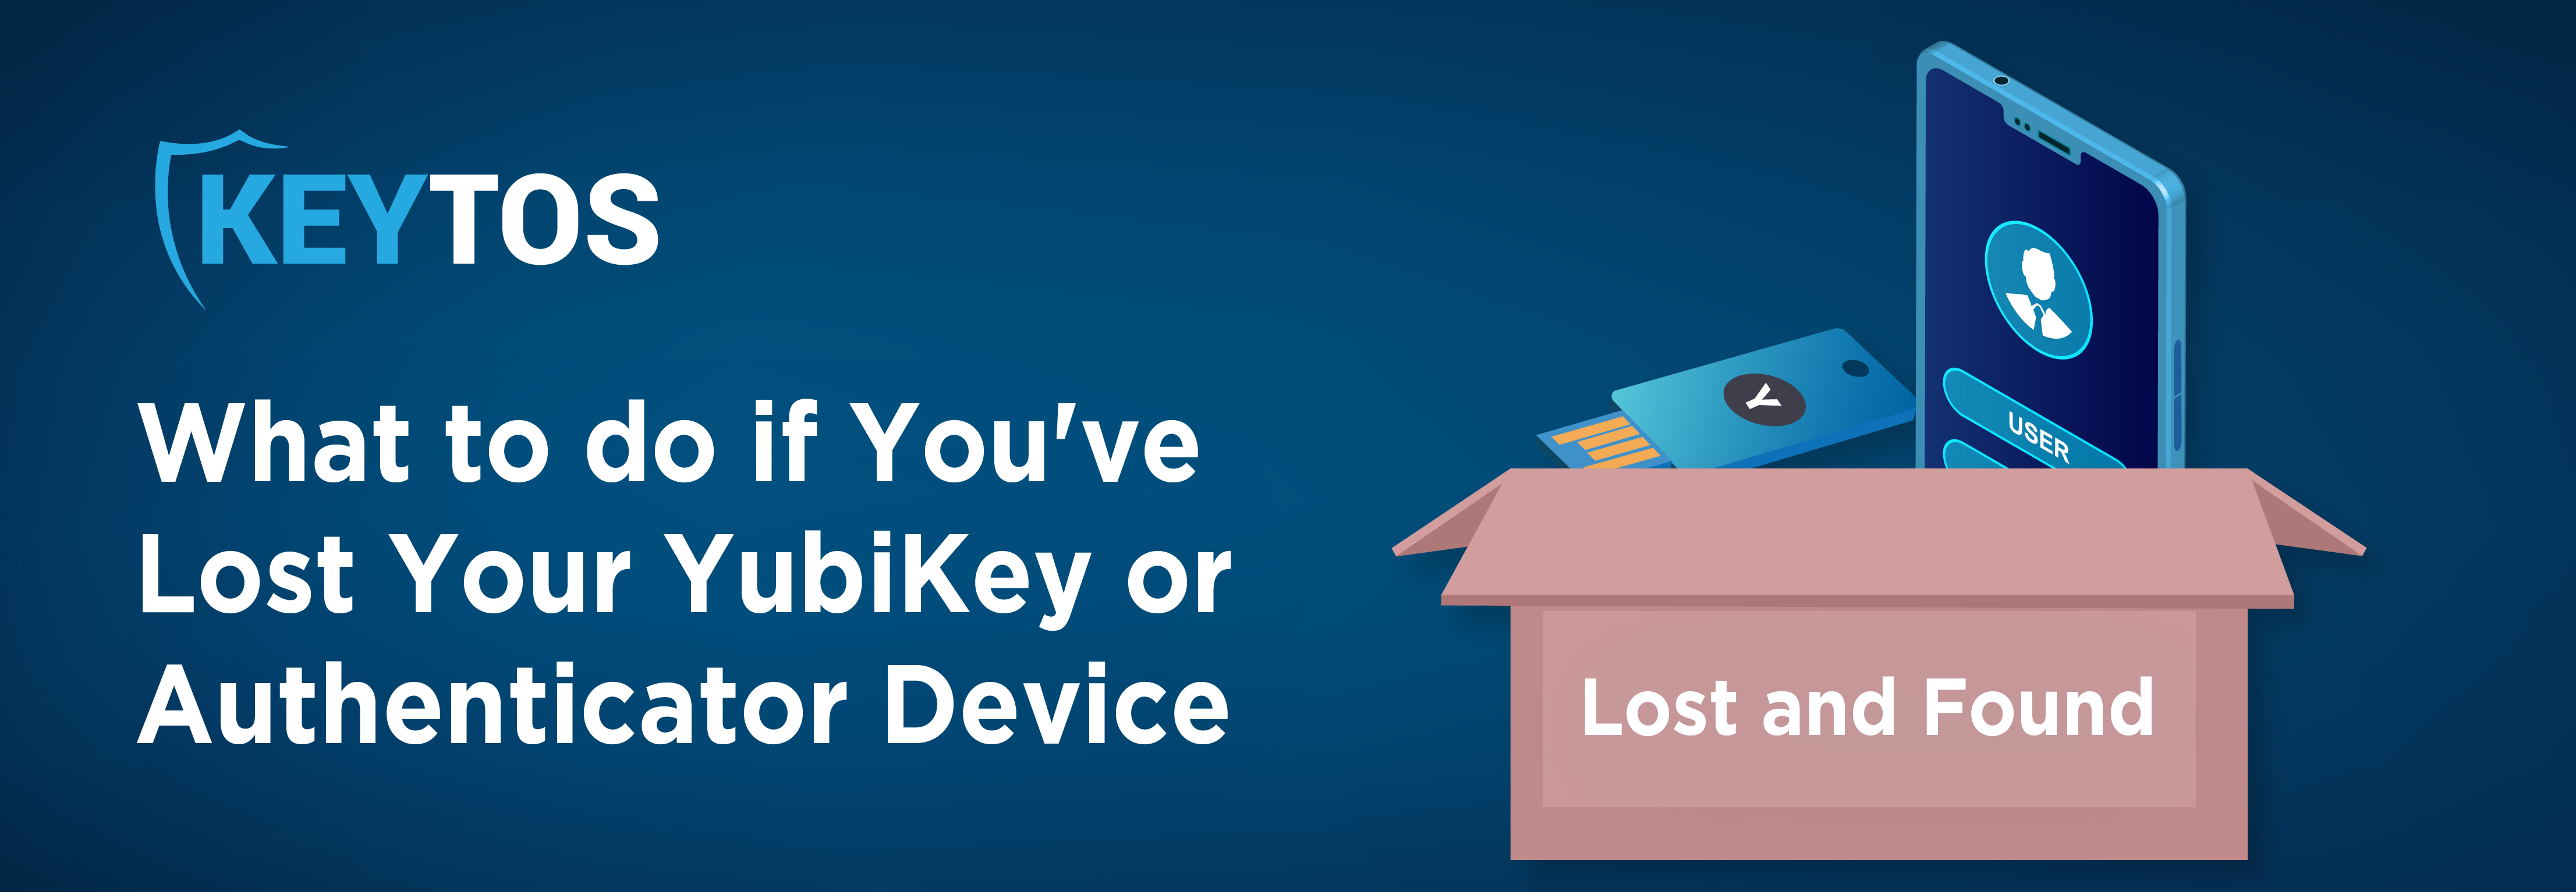 Qué hacer si pierdes tu dispositivo YubiKey o Authenticator